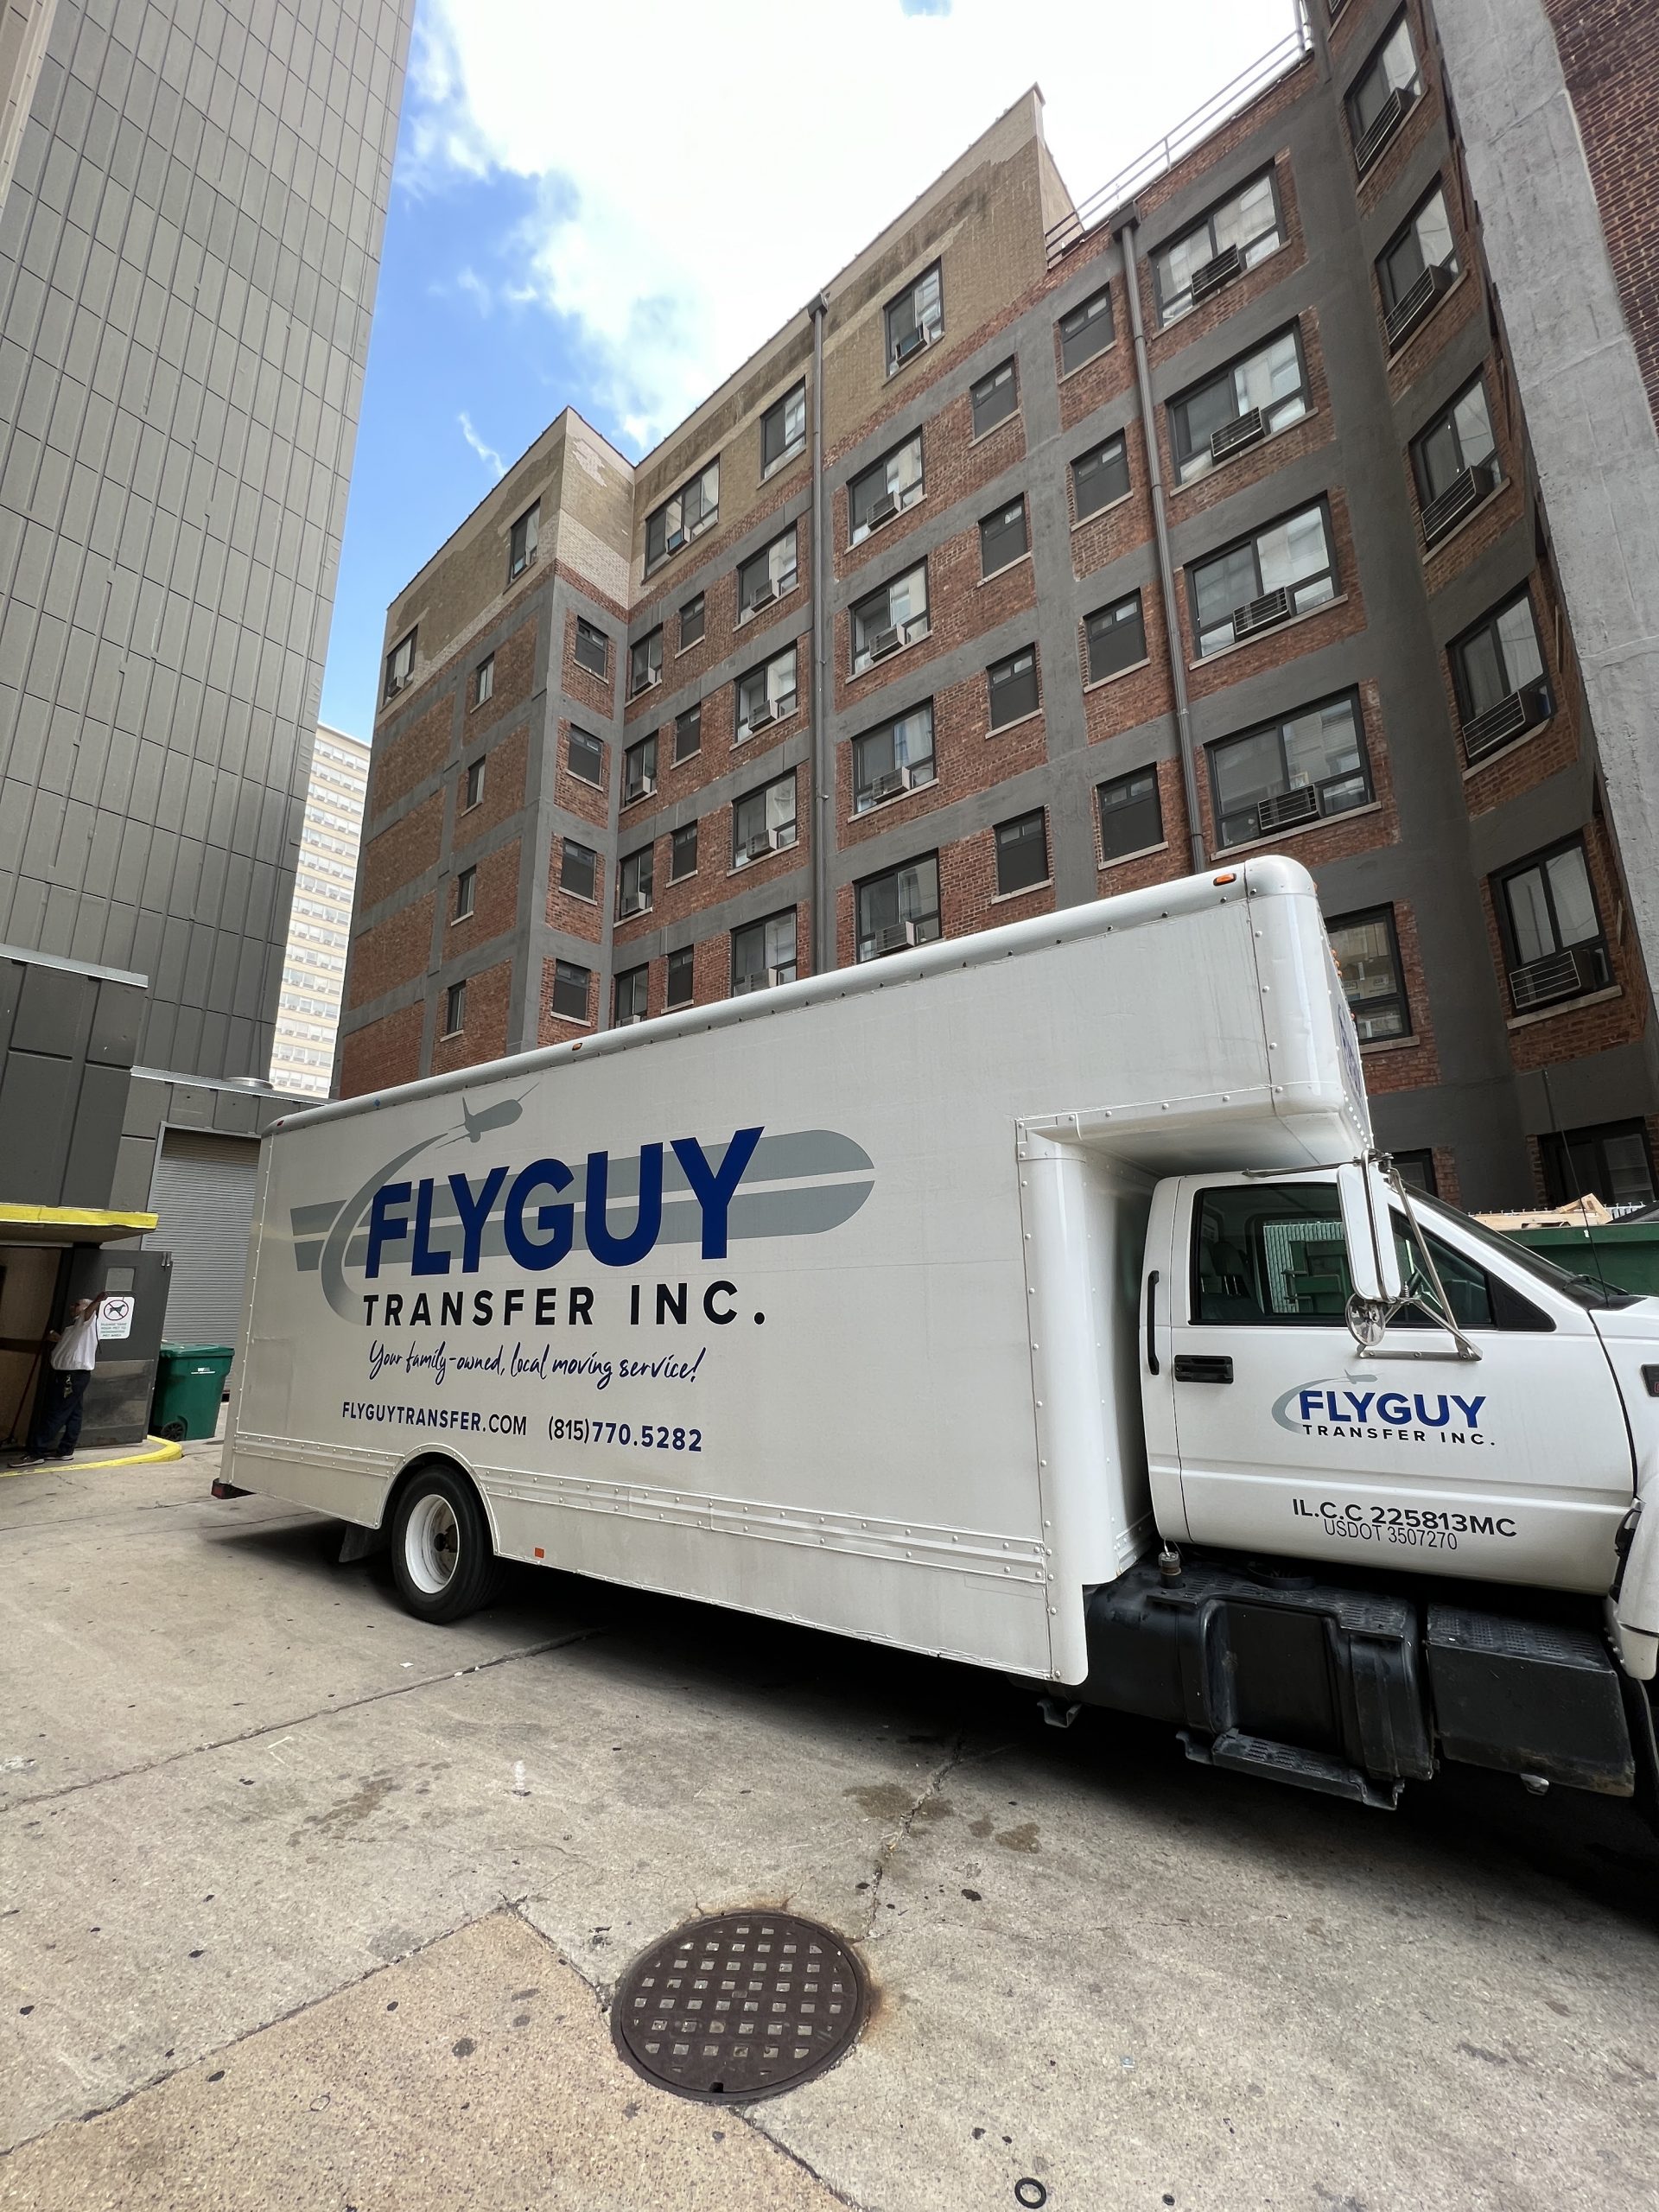 Fly Guy Tranfer moving truck parked outside multi-story building. Fly Guy Transfer